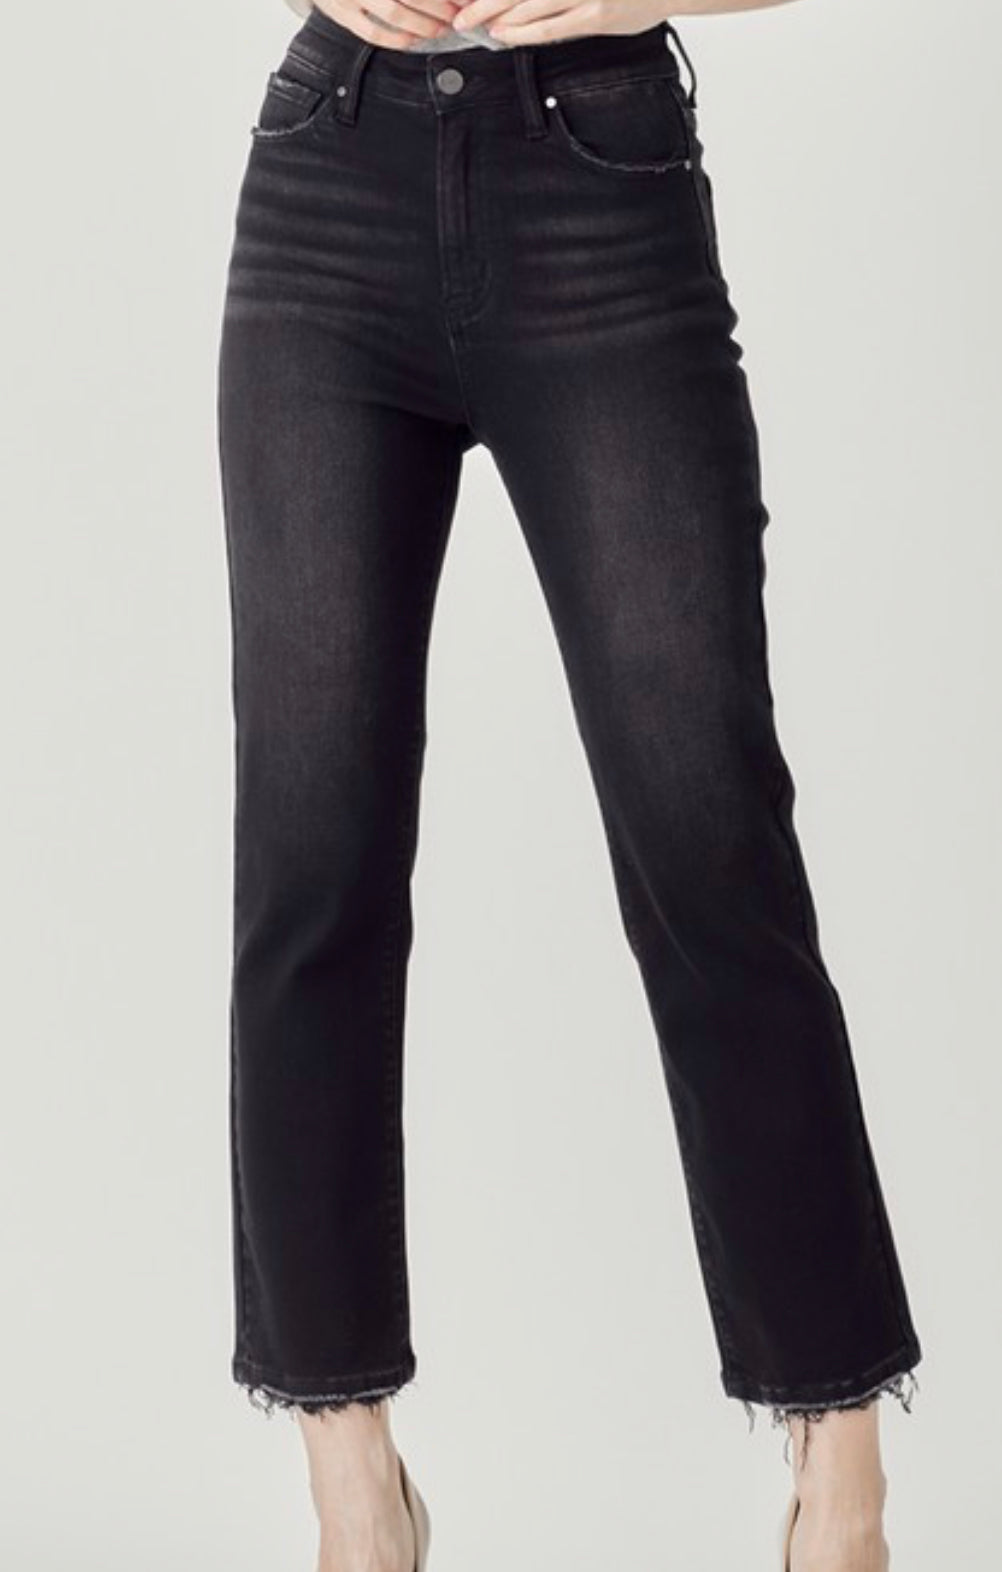 Black Risen Brand Jeans